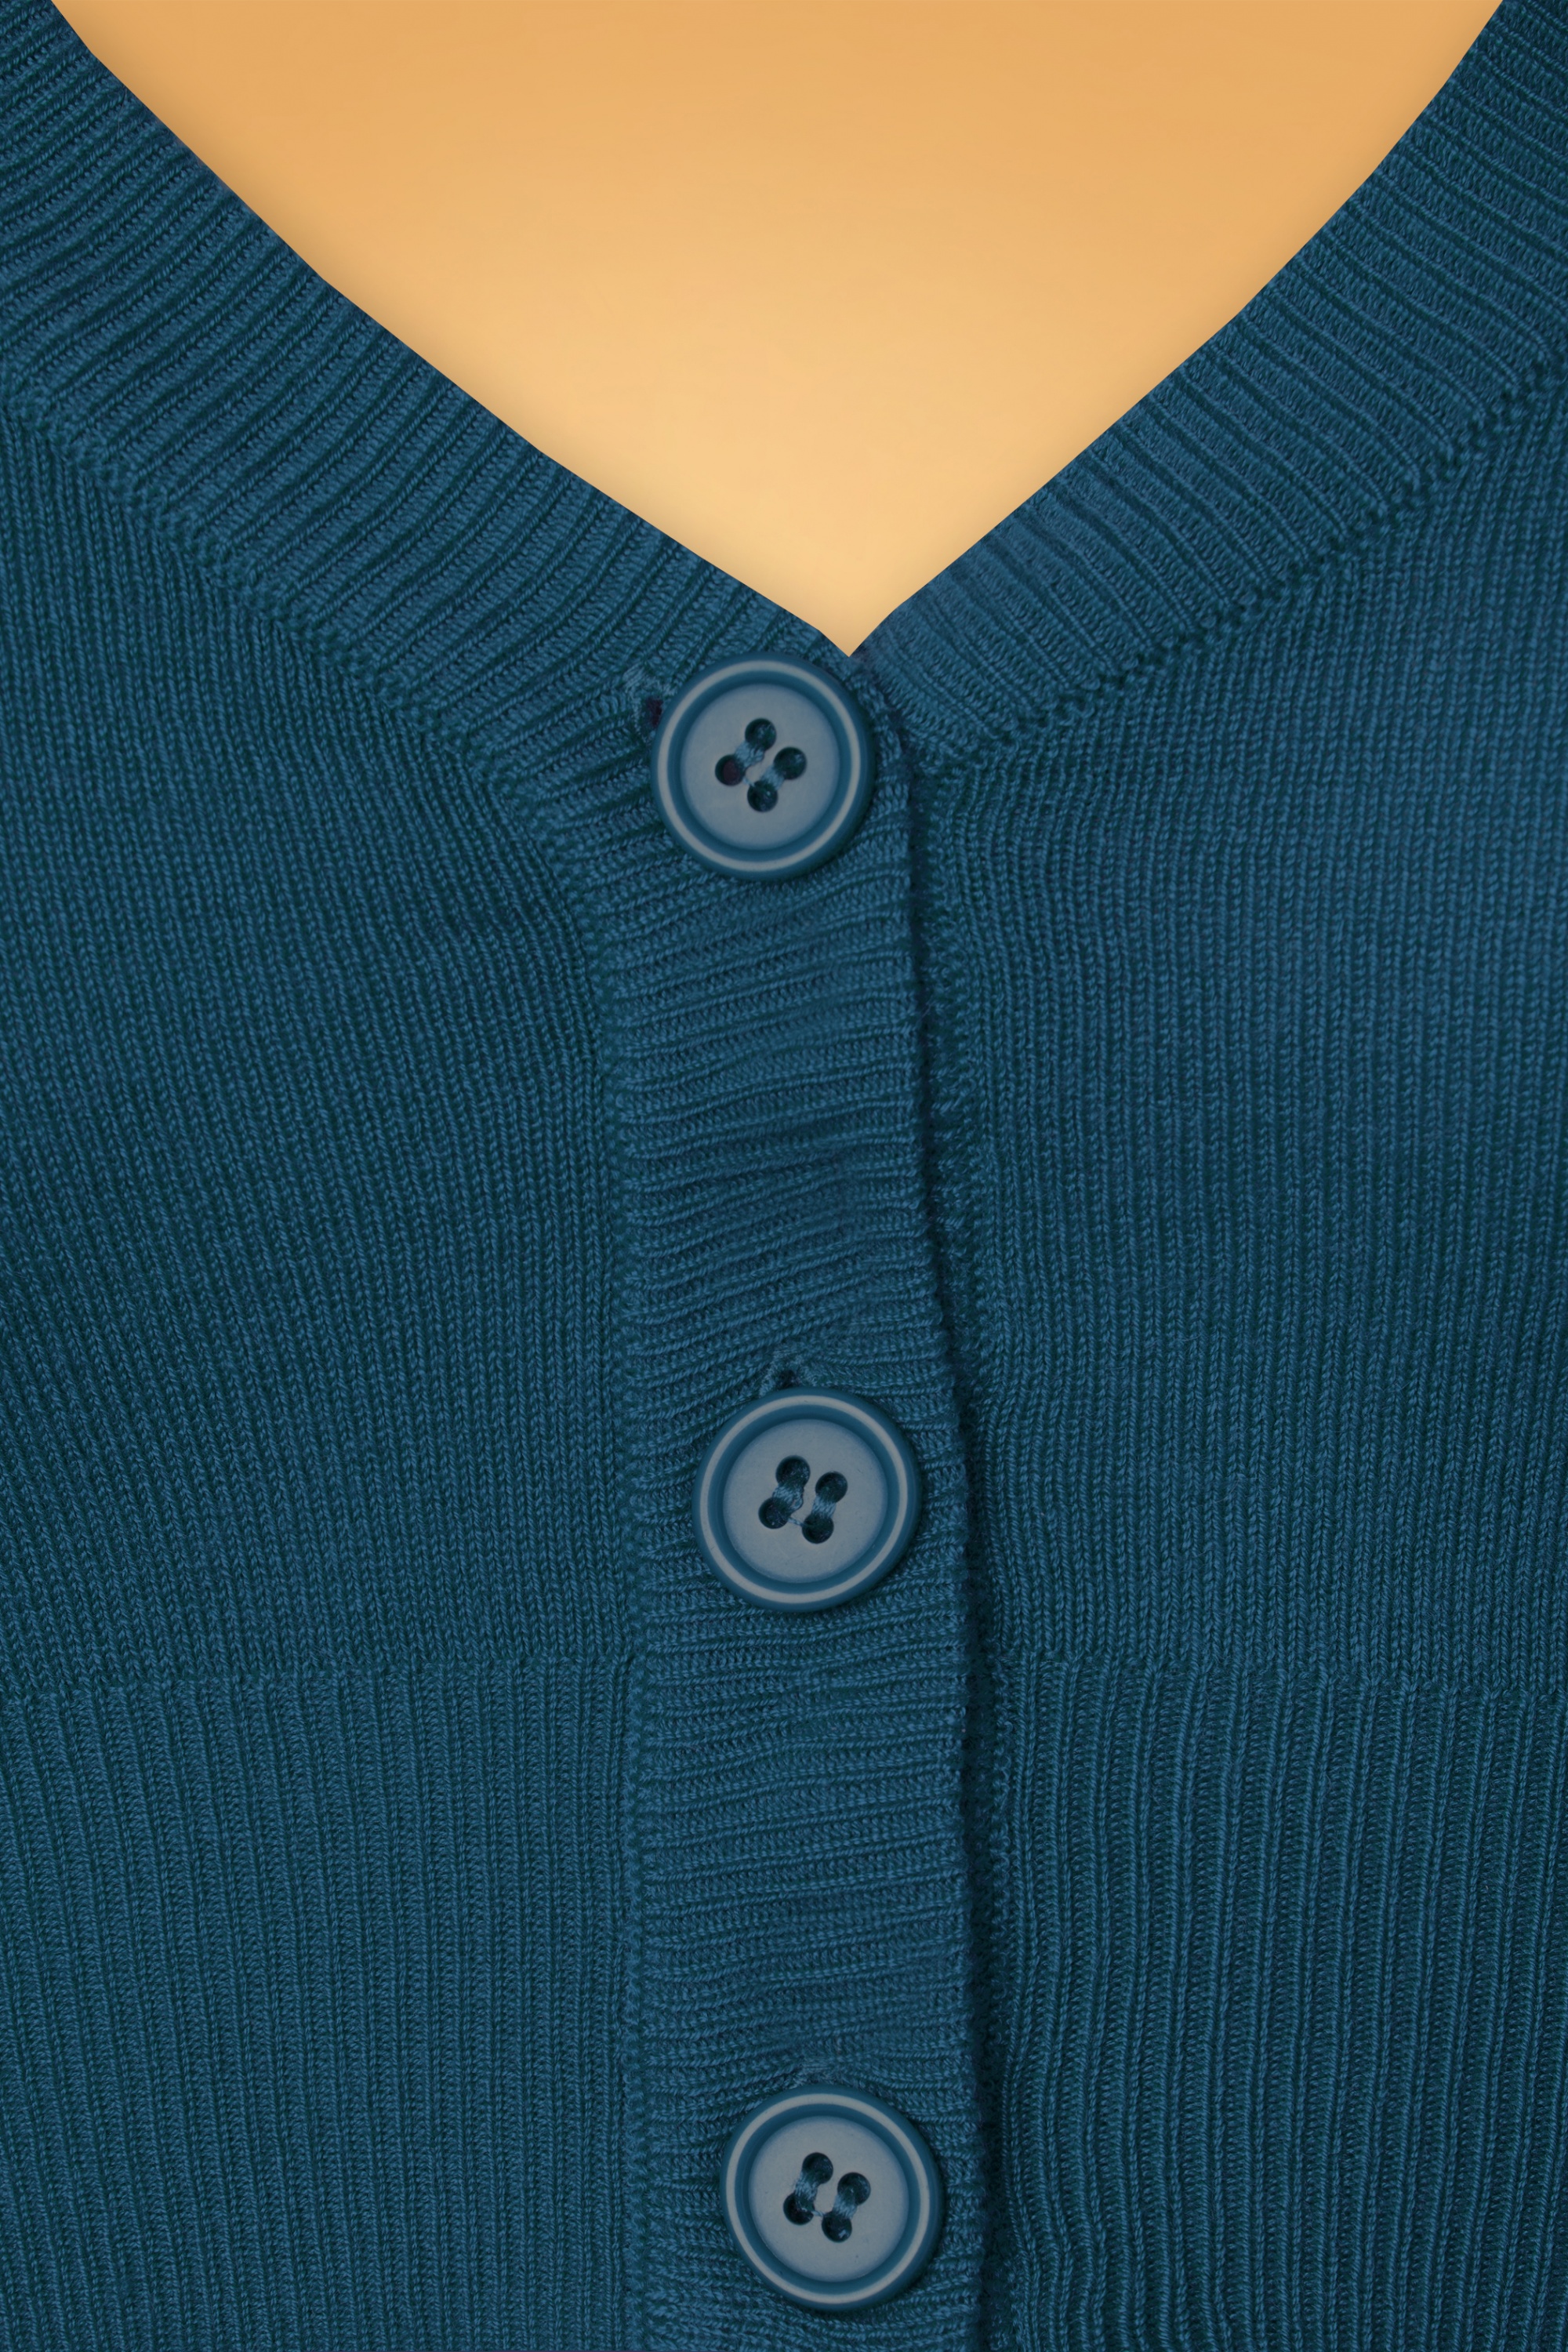 Mak Sweater - Shela cropped vest in teal blauw 3